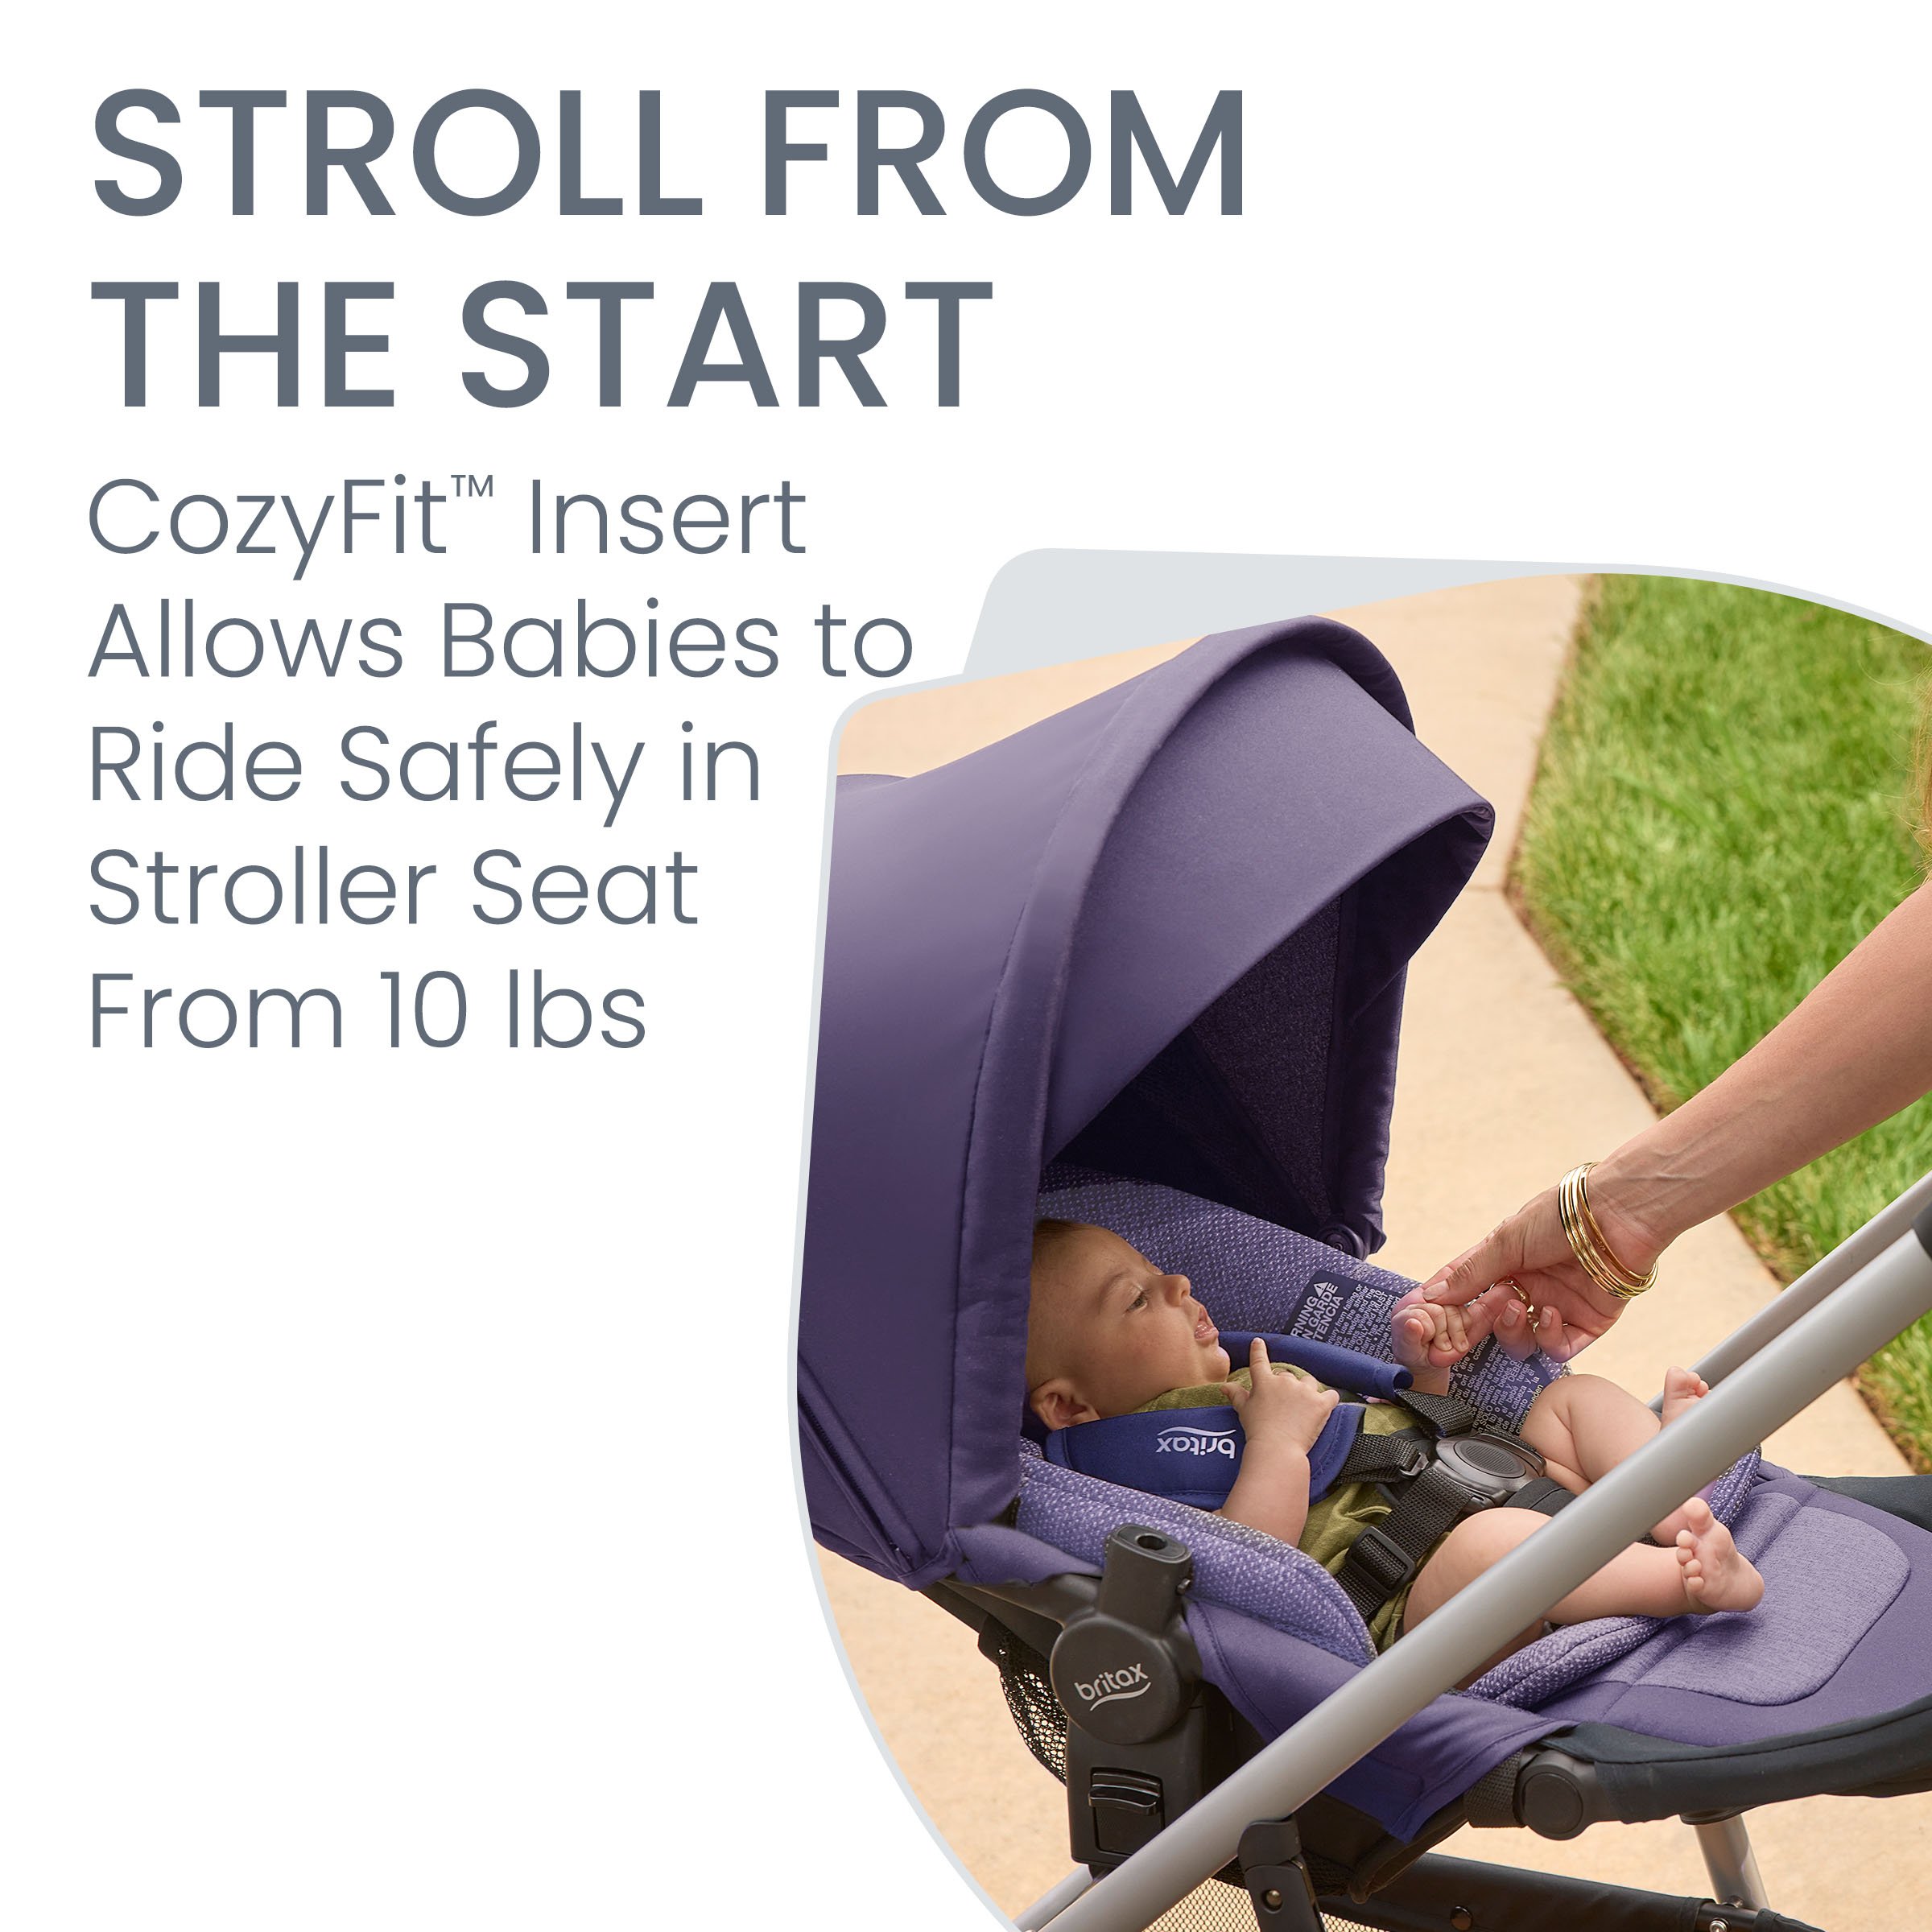 10 lb baby in stroller using cozyFit Insert